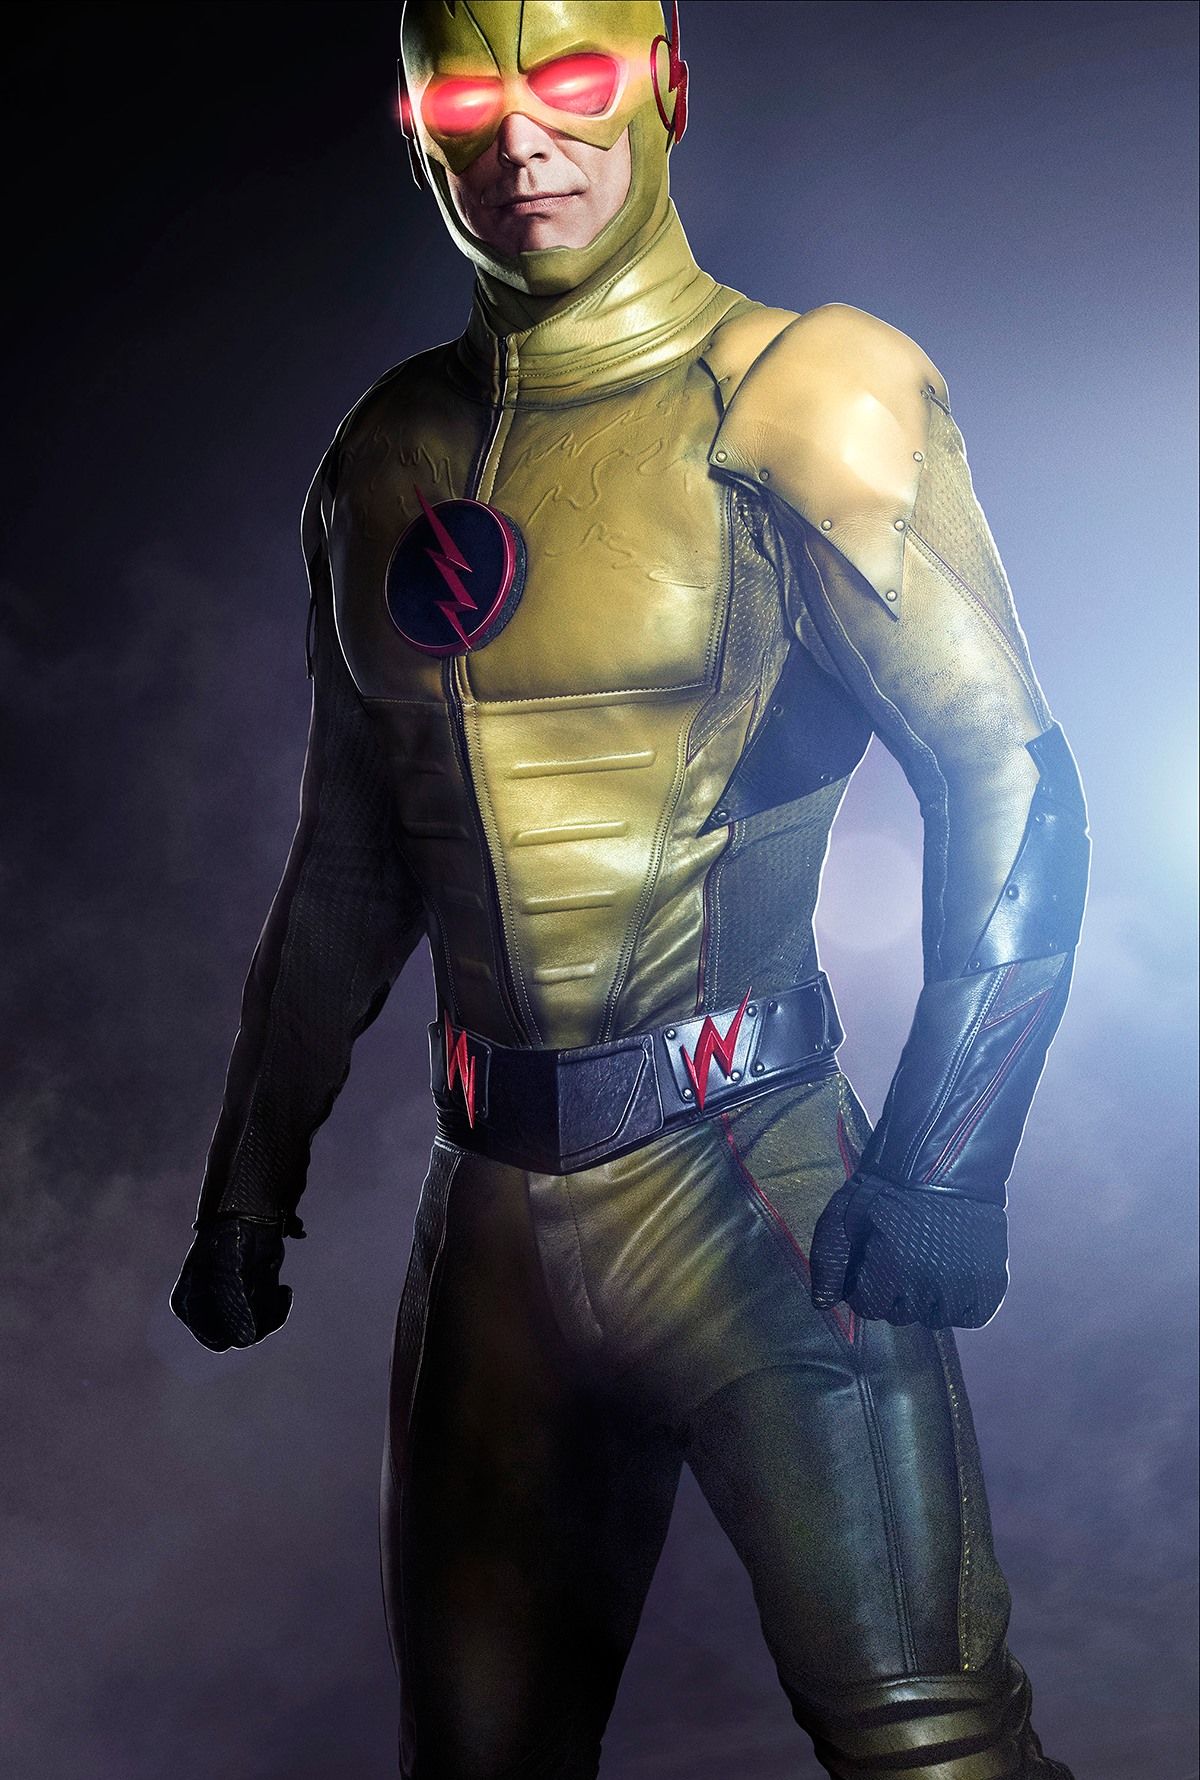 Reverse flash costume